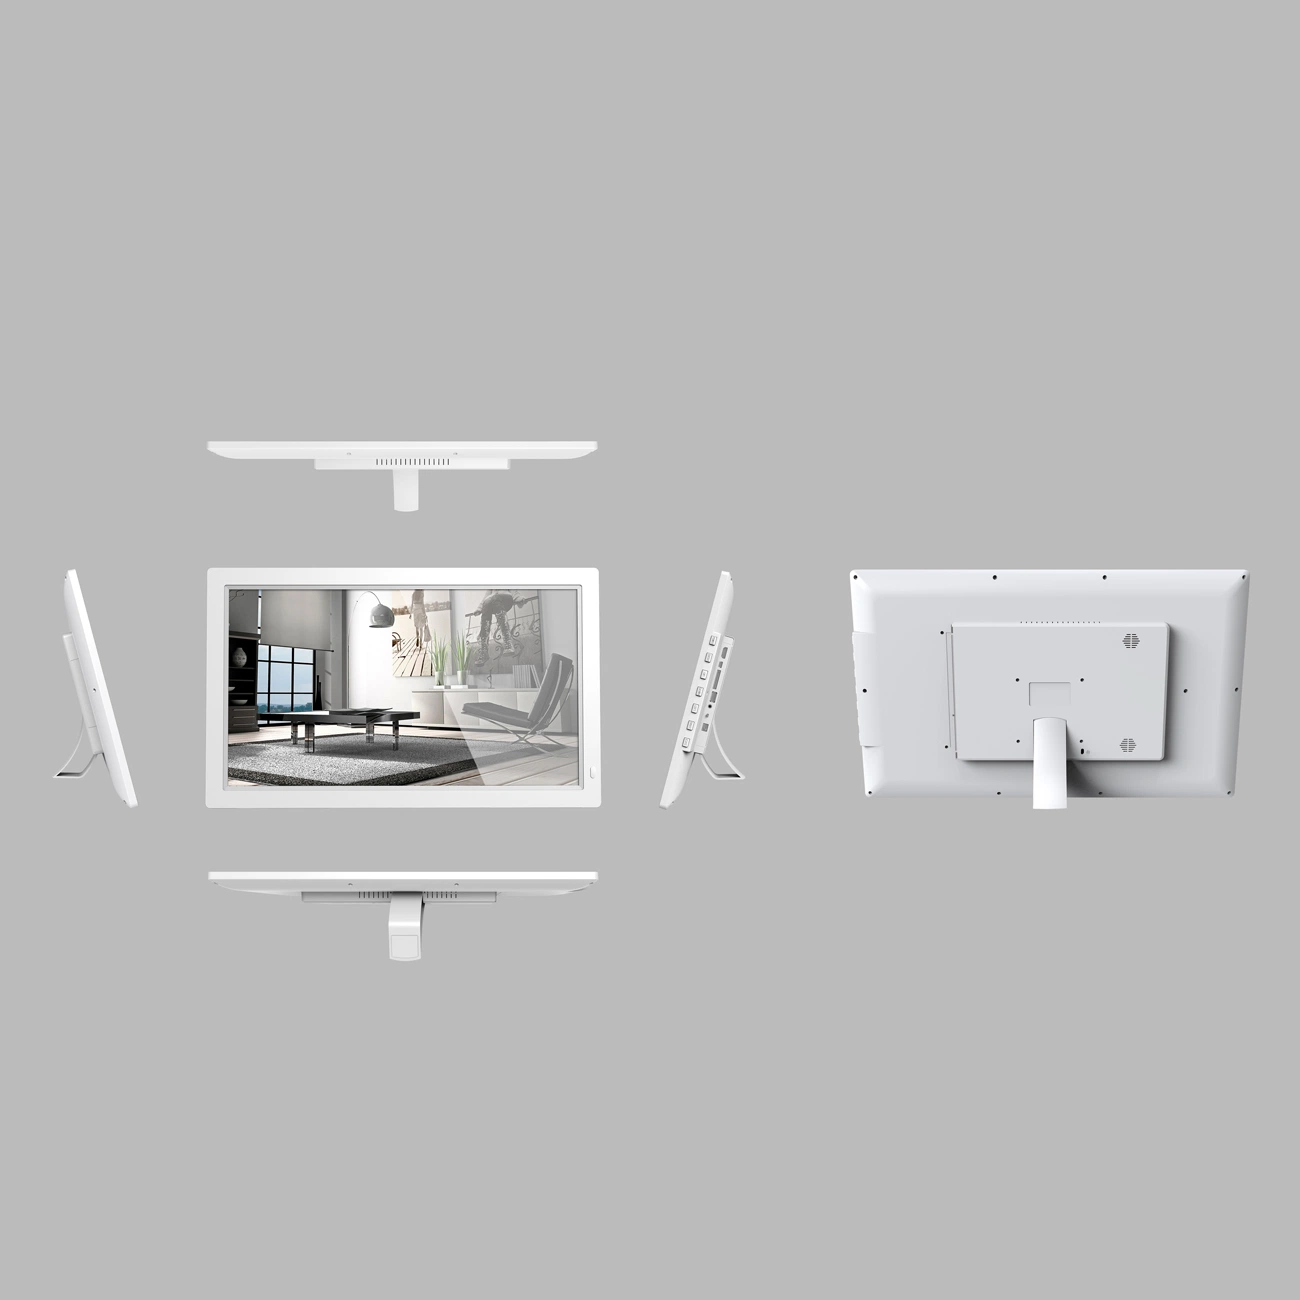 Montaje en pared de kiosco interactivo RoHS CE de 18,5 pulgadas ampliamente utilizado Punto de módulo abierto Professional PCAP táctil TFT respuesta de pantalla sensible Junta comercial Android TV